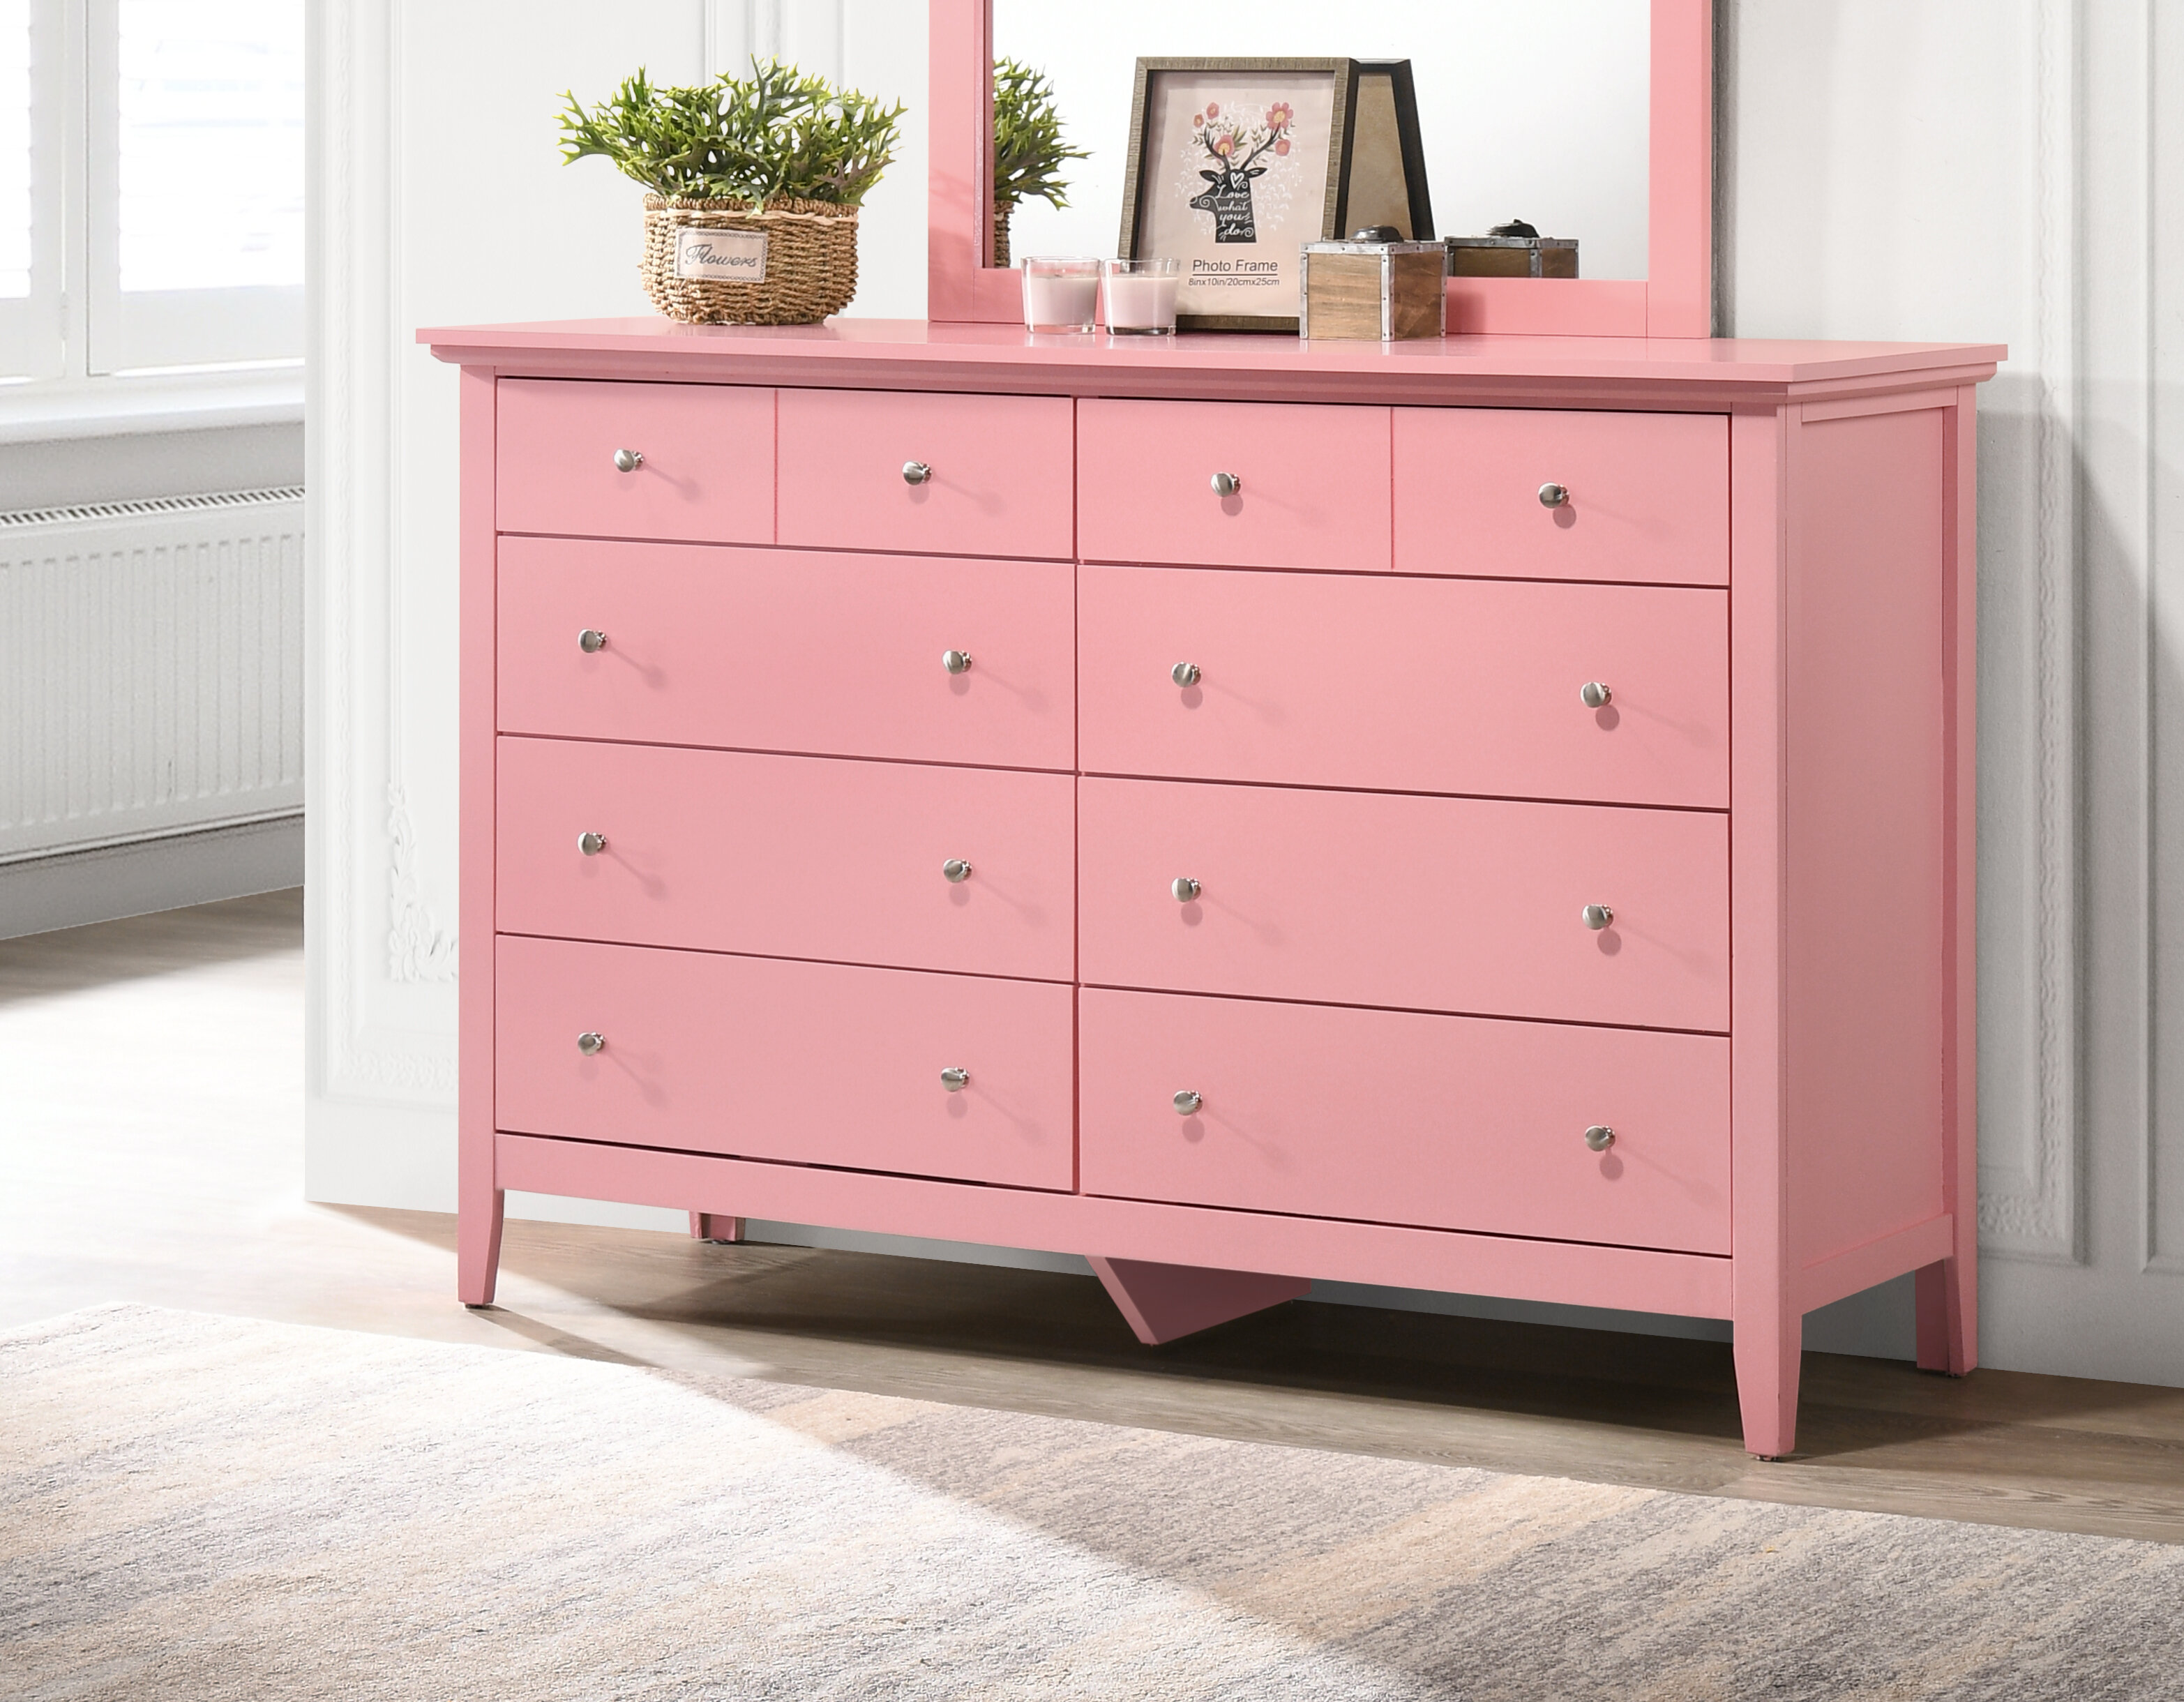 pink dresser for girls